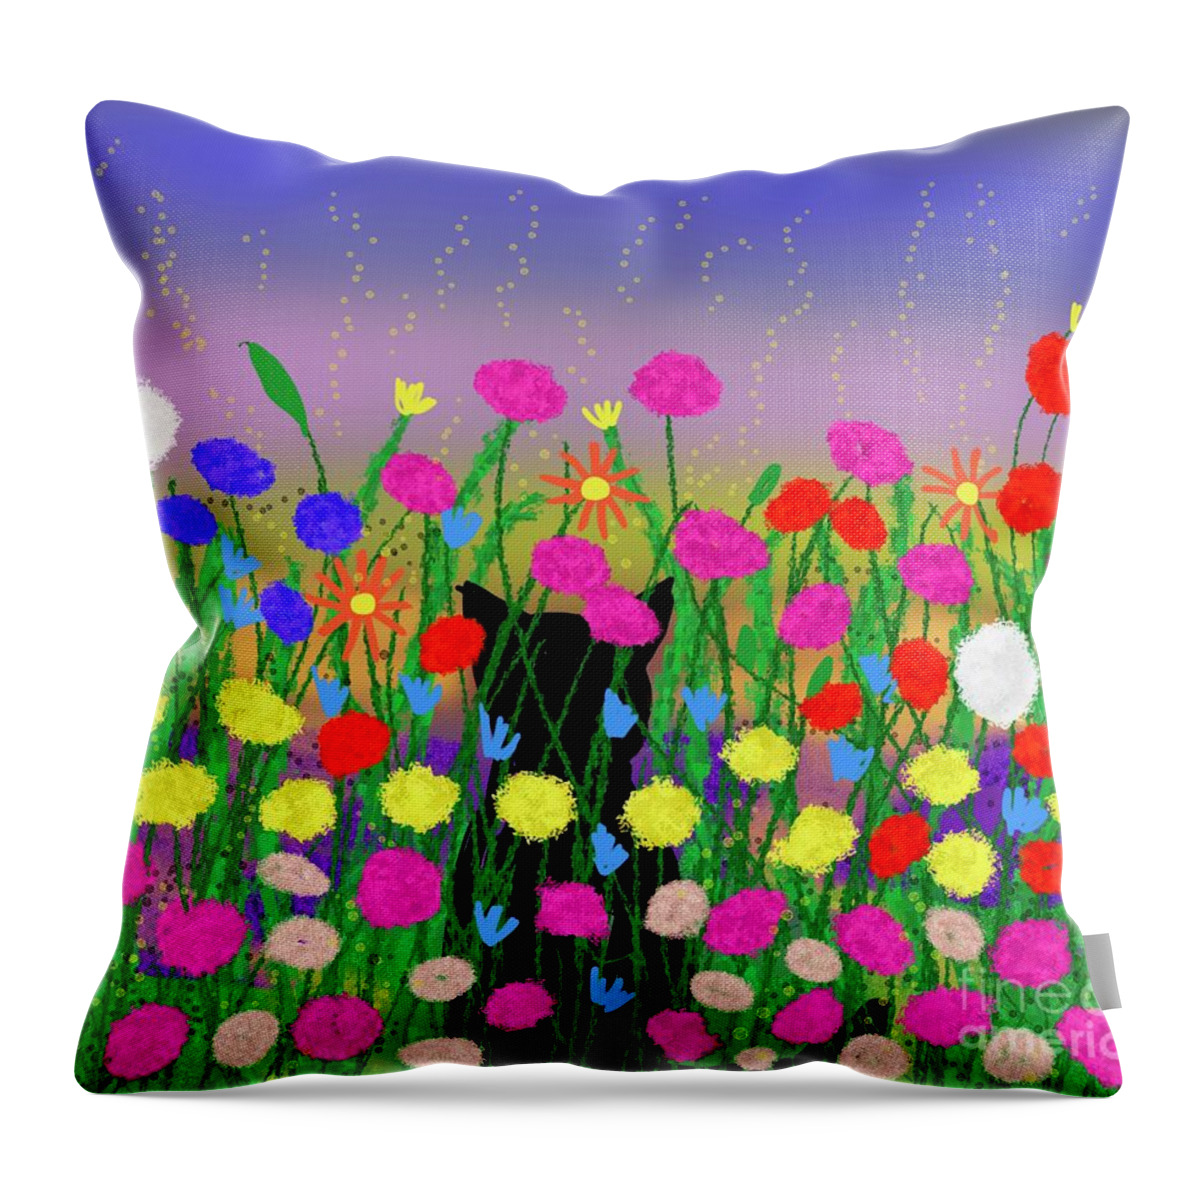 Colourful Throw Pillow featuring the digital art Hiding amongst the flowers by Elaine Hayward